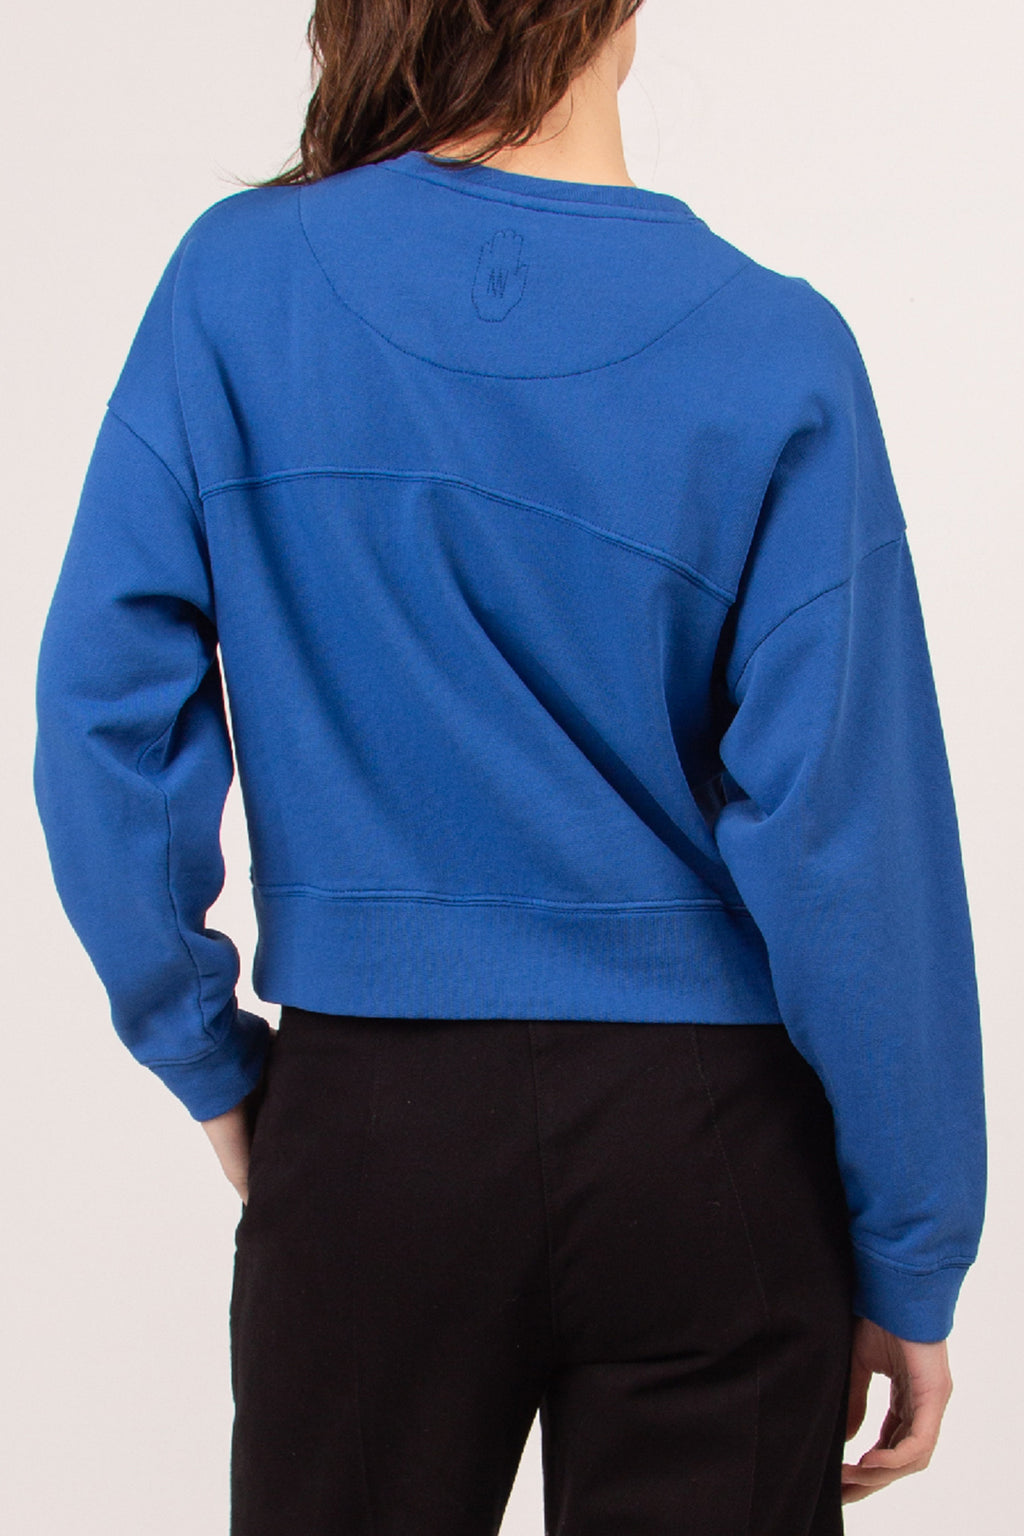 Amra cobalt sweater